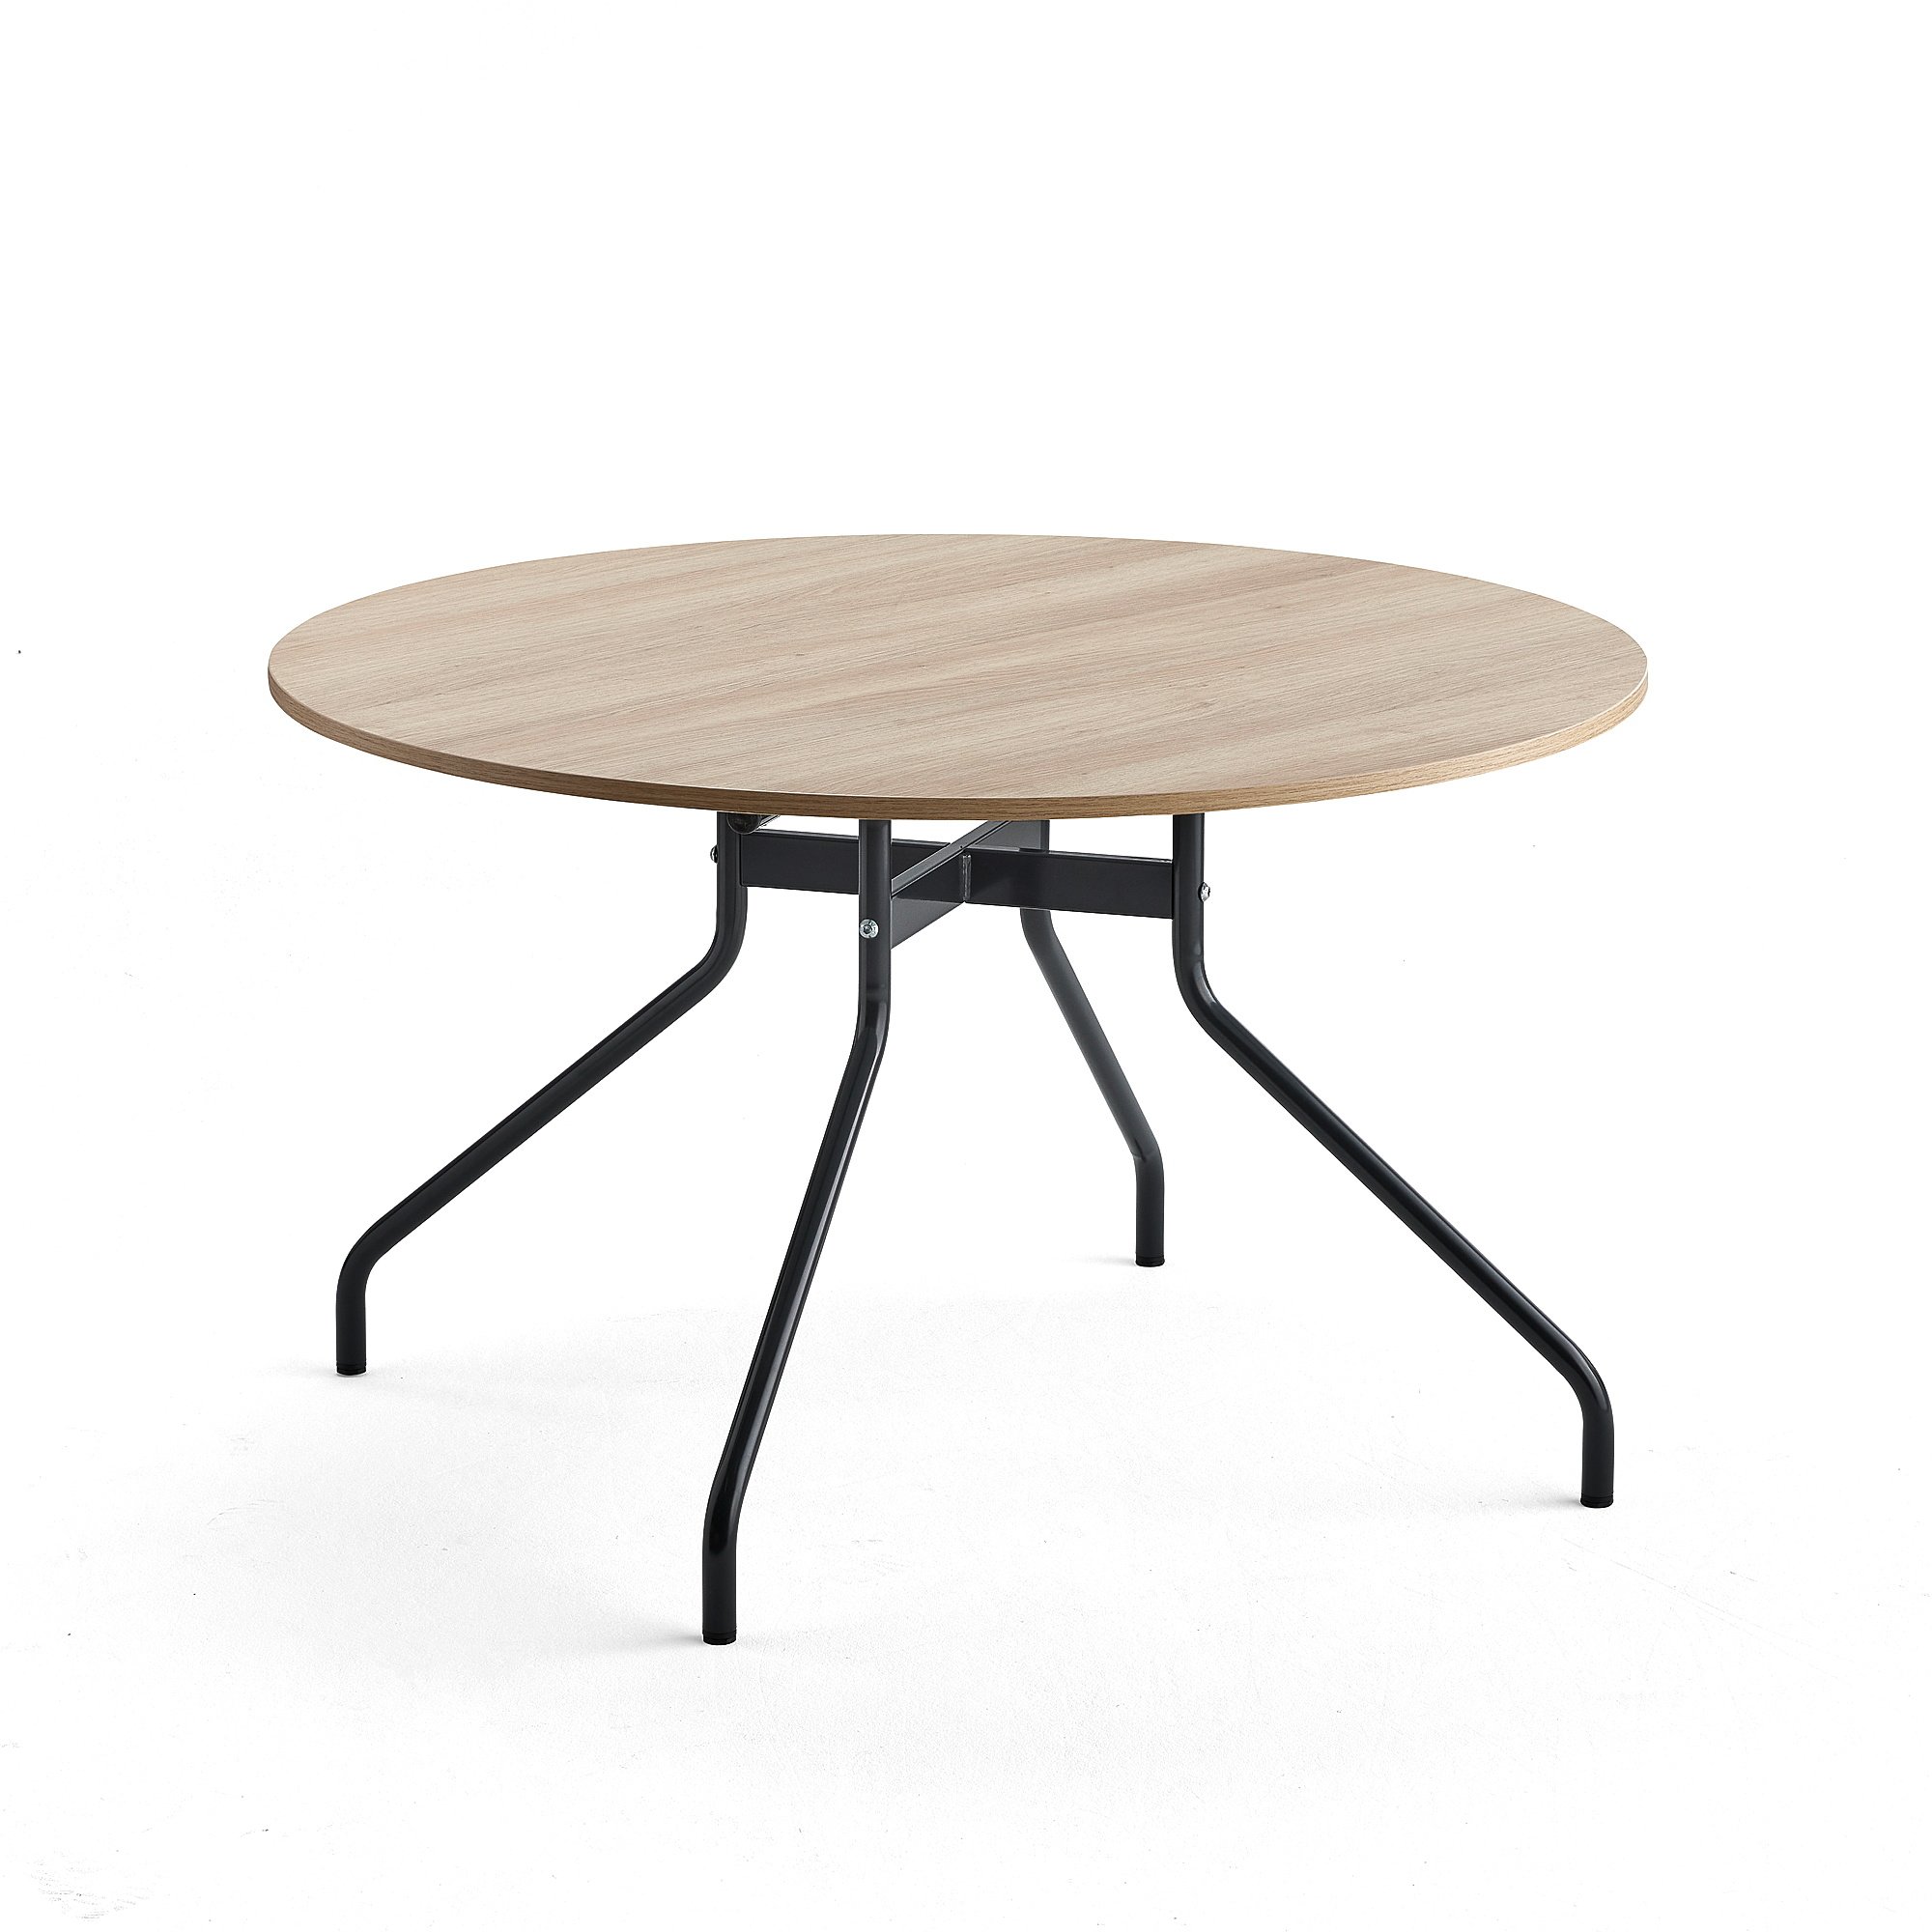 Stôl AROUND, Ø 1200 mm, dub, antracit